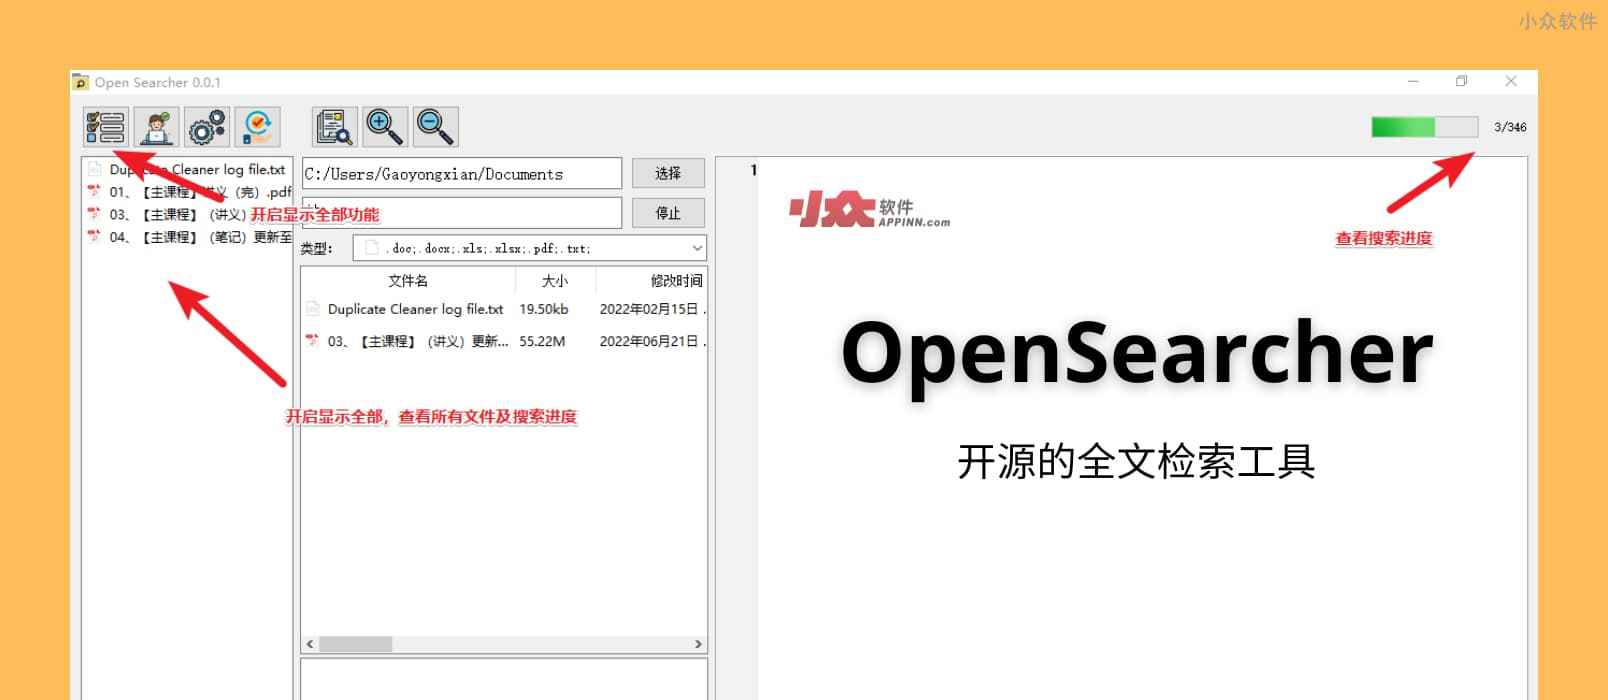 OpenSearcher – 开源的全文搜索工具：支持 Word、PPT、PDF，以及电子书 ePub、Mobi 等格式[Windows]